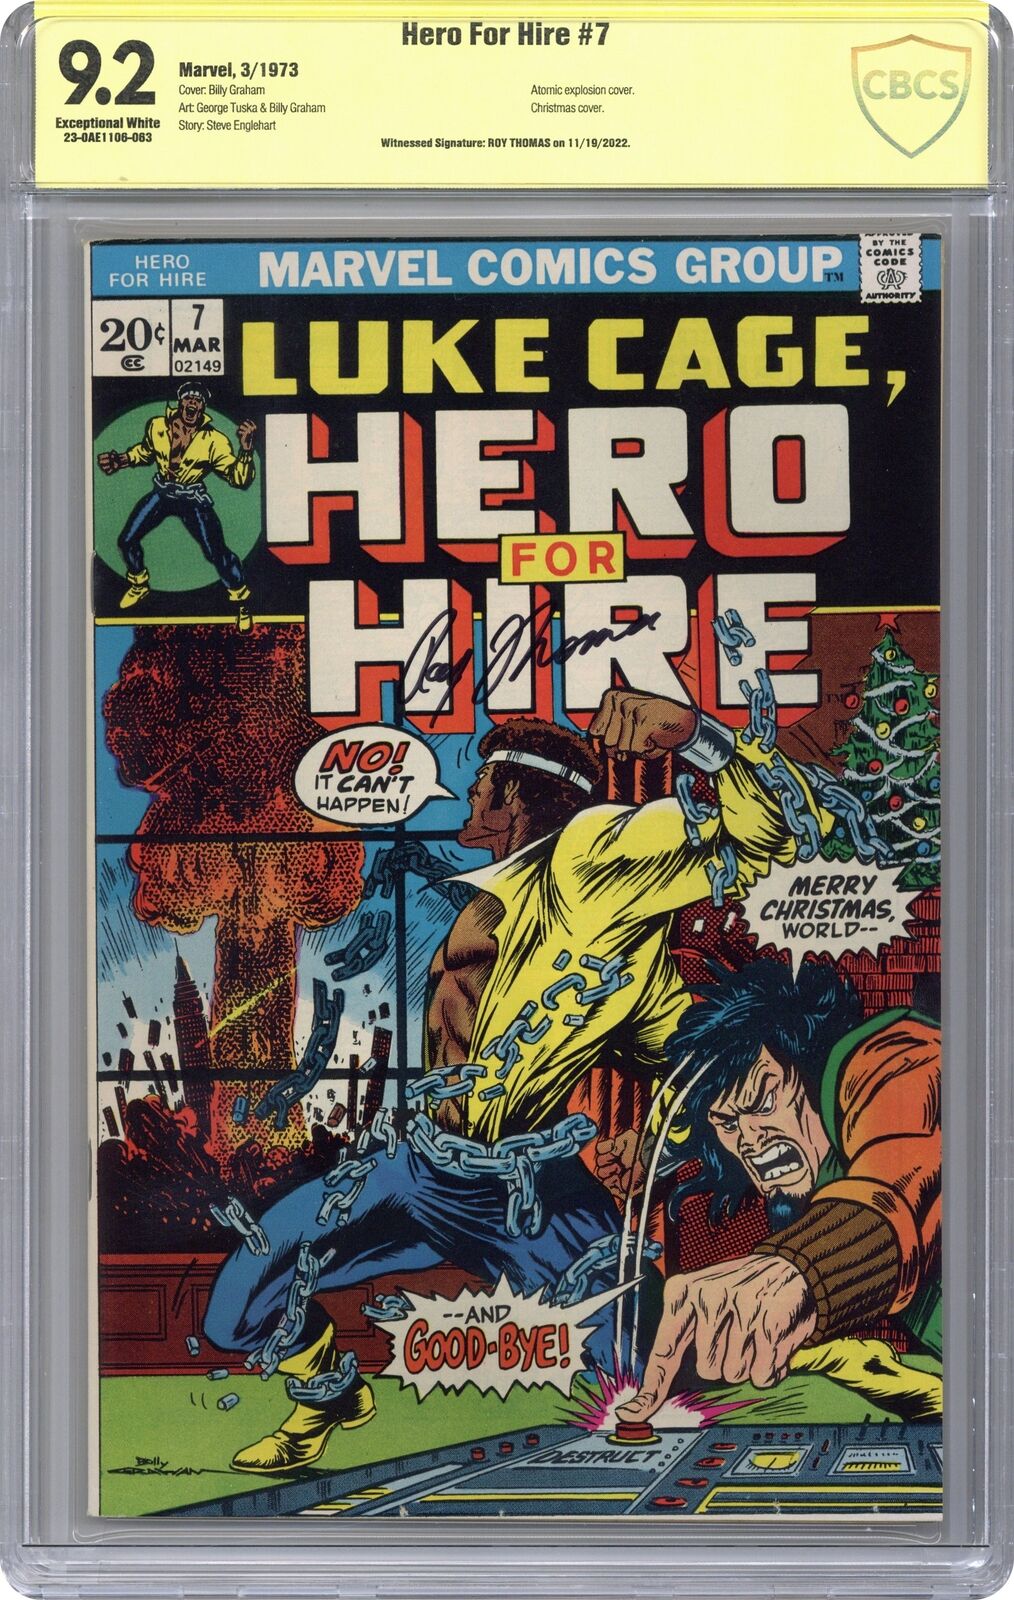 Power Man and Iron Fist Luke Cage #7 CBCS 9.2 SS Roy Thomas 1973 23-0AE1106-063